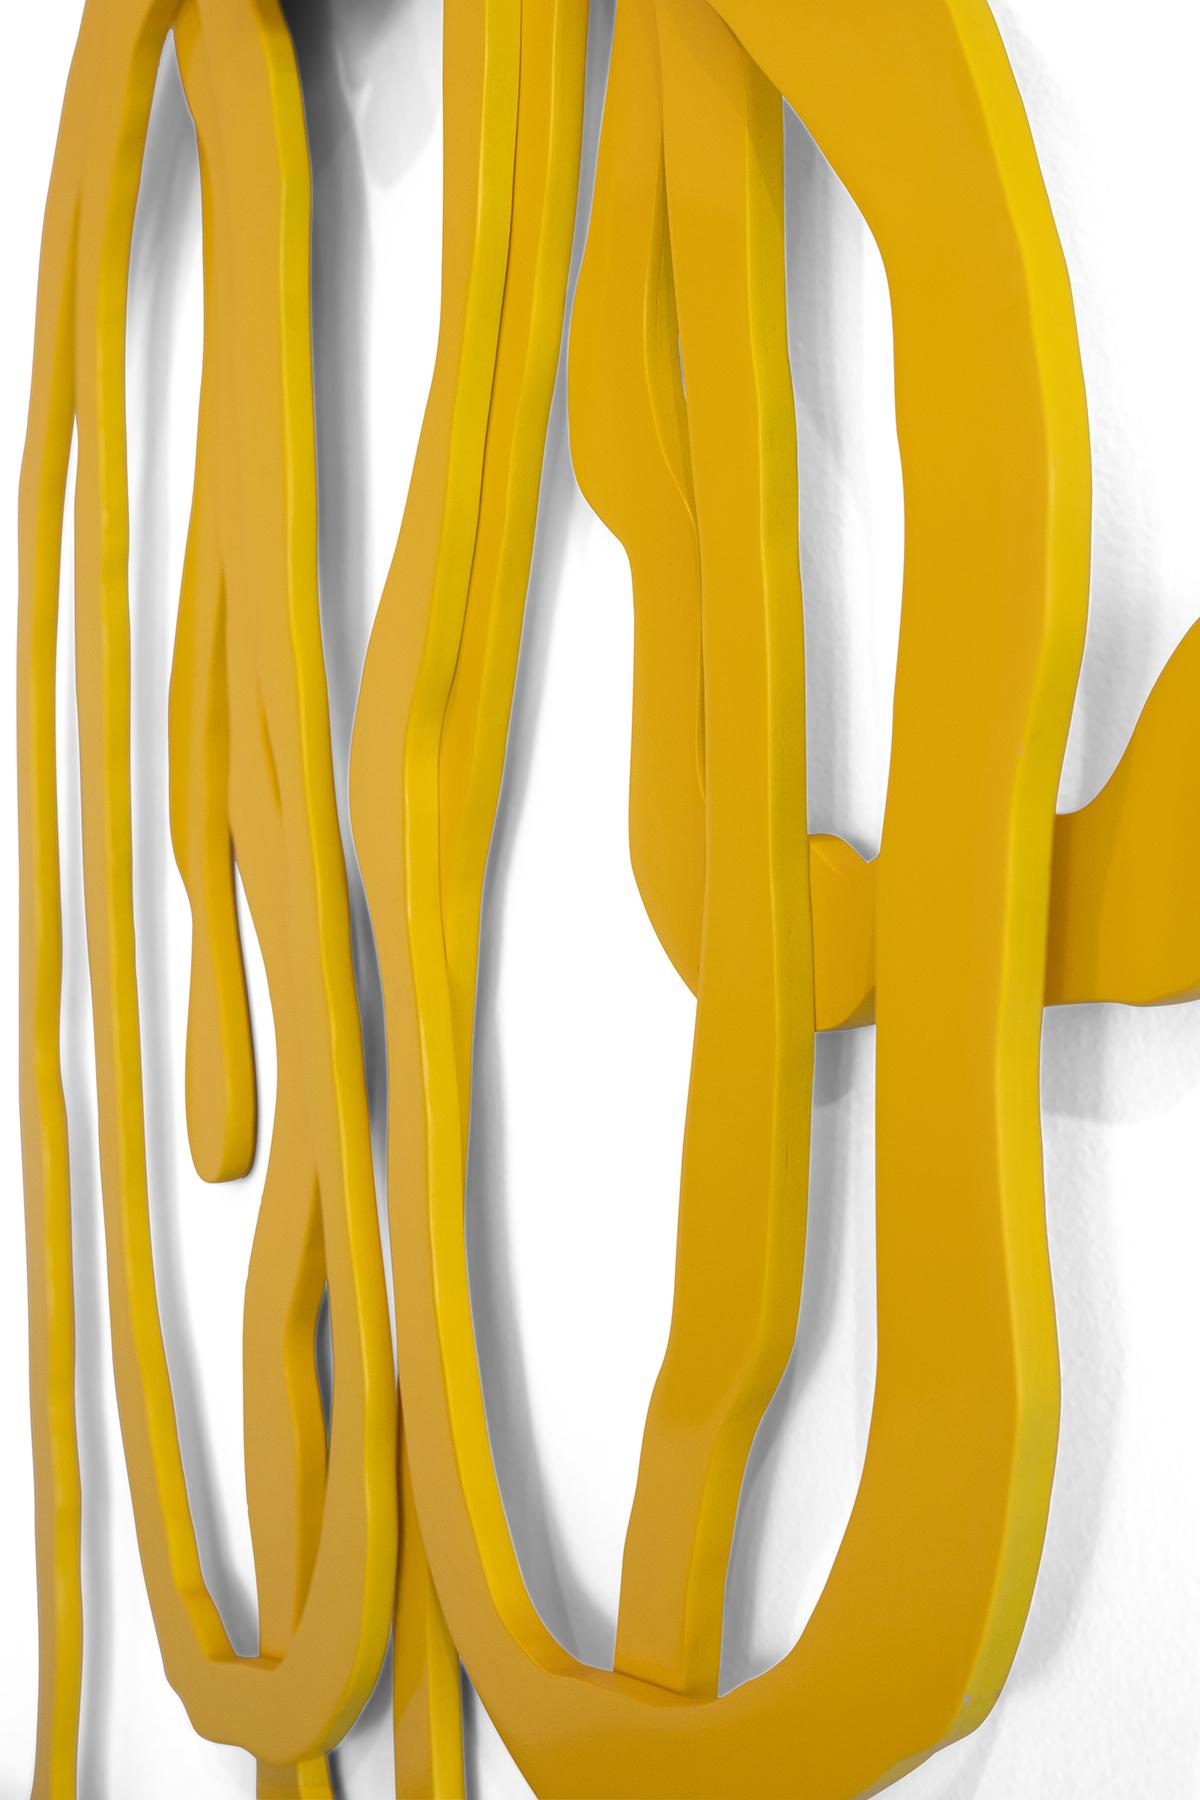 Mid-Century Modern Jeff Low 'Yellow Knot' Modern Wall Sculpture